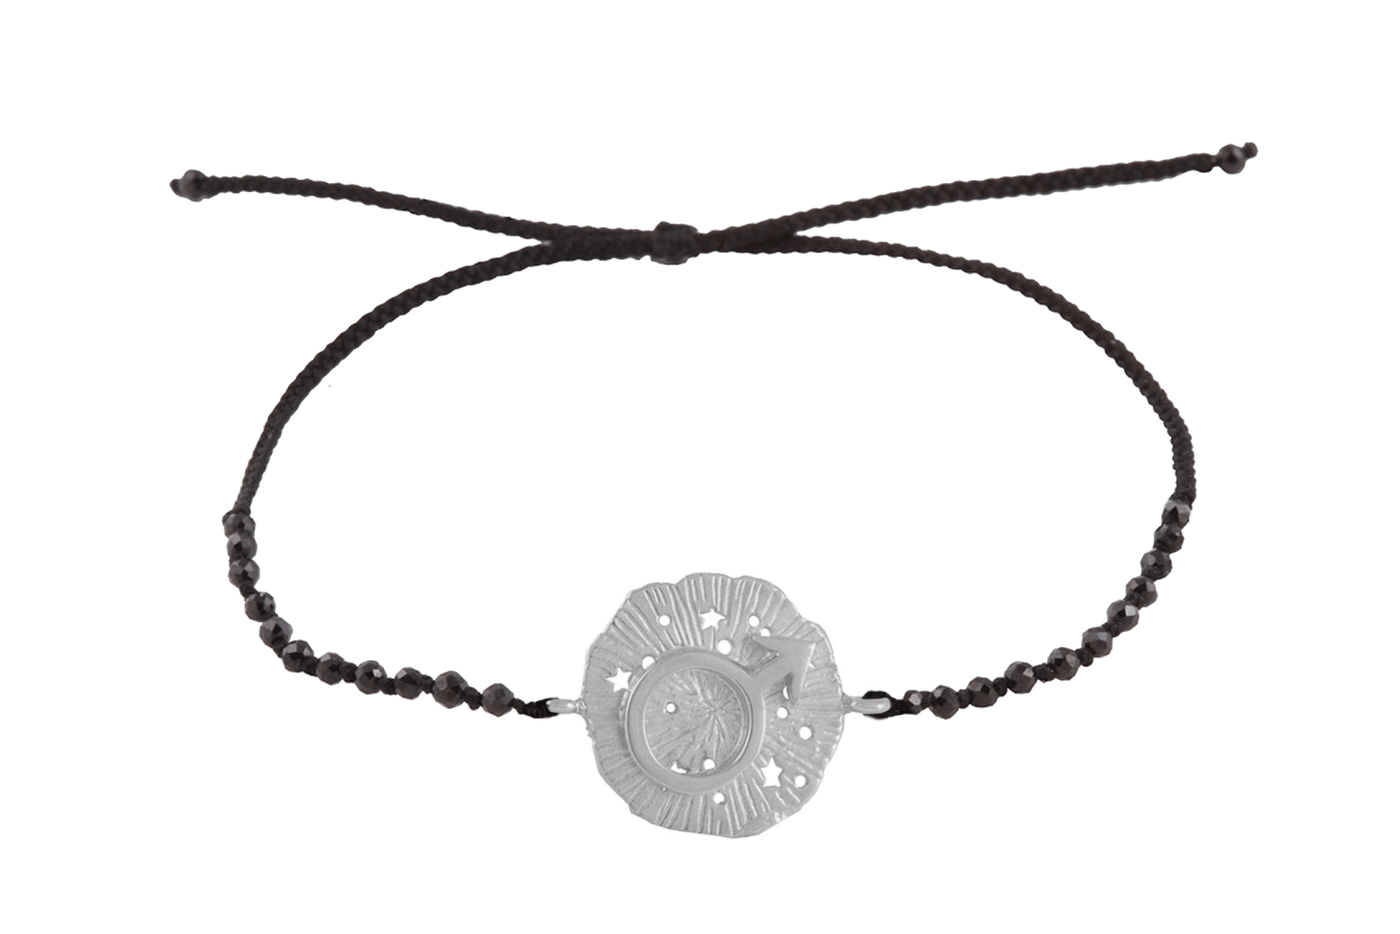 Mars Medallion Amulet bracelet with beads. Silver